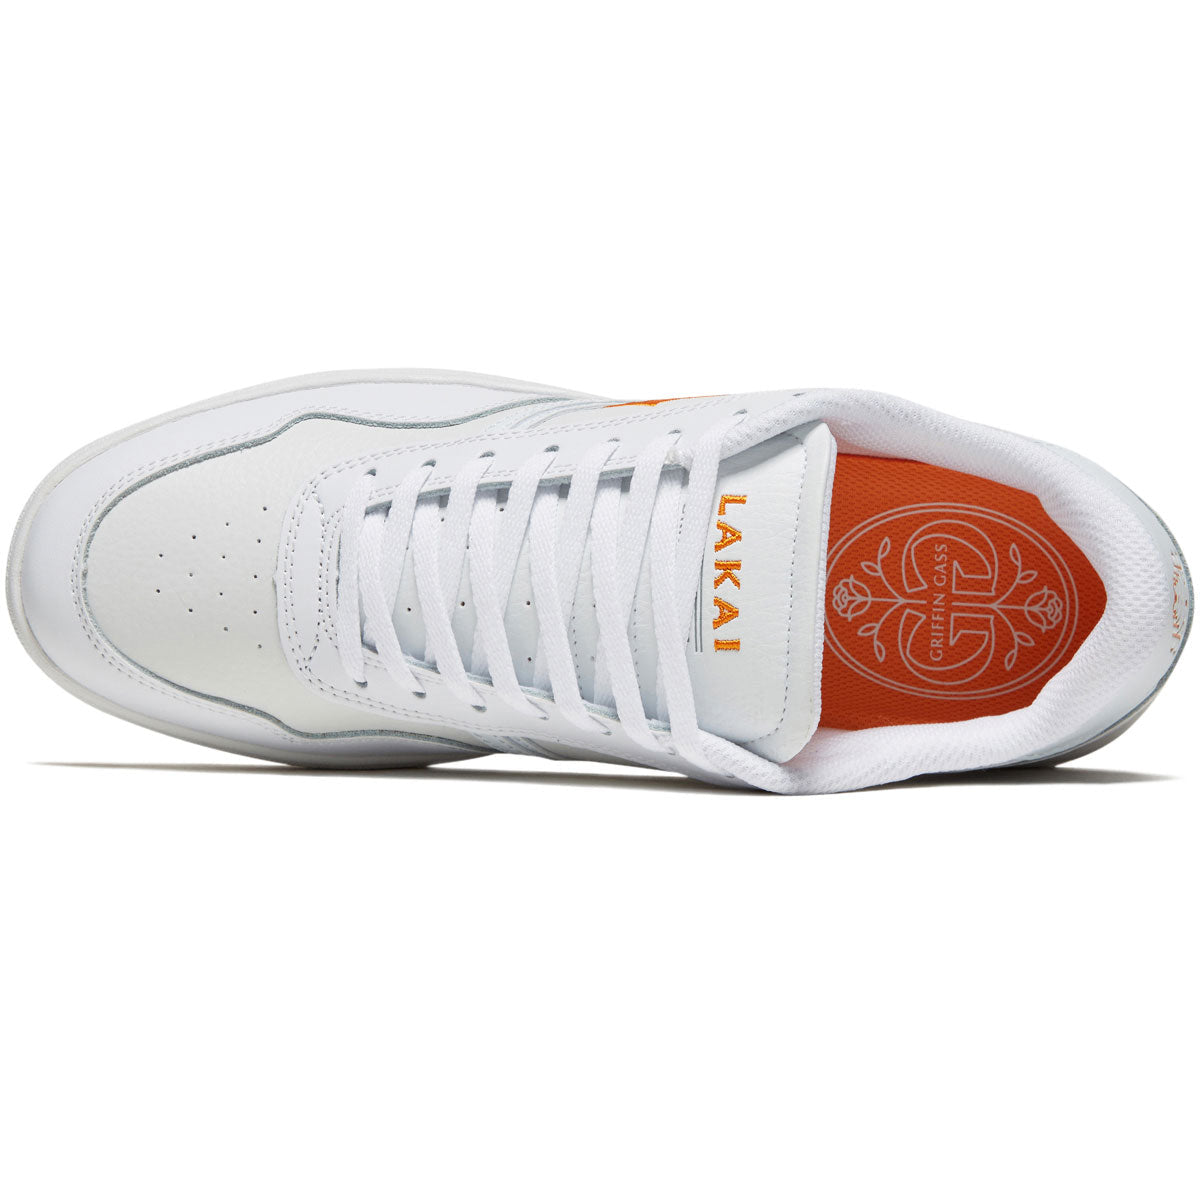 Lakai Terrace Shoes - White Leather image 3